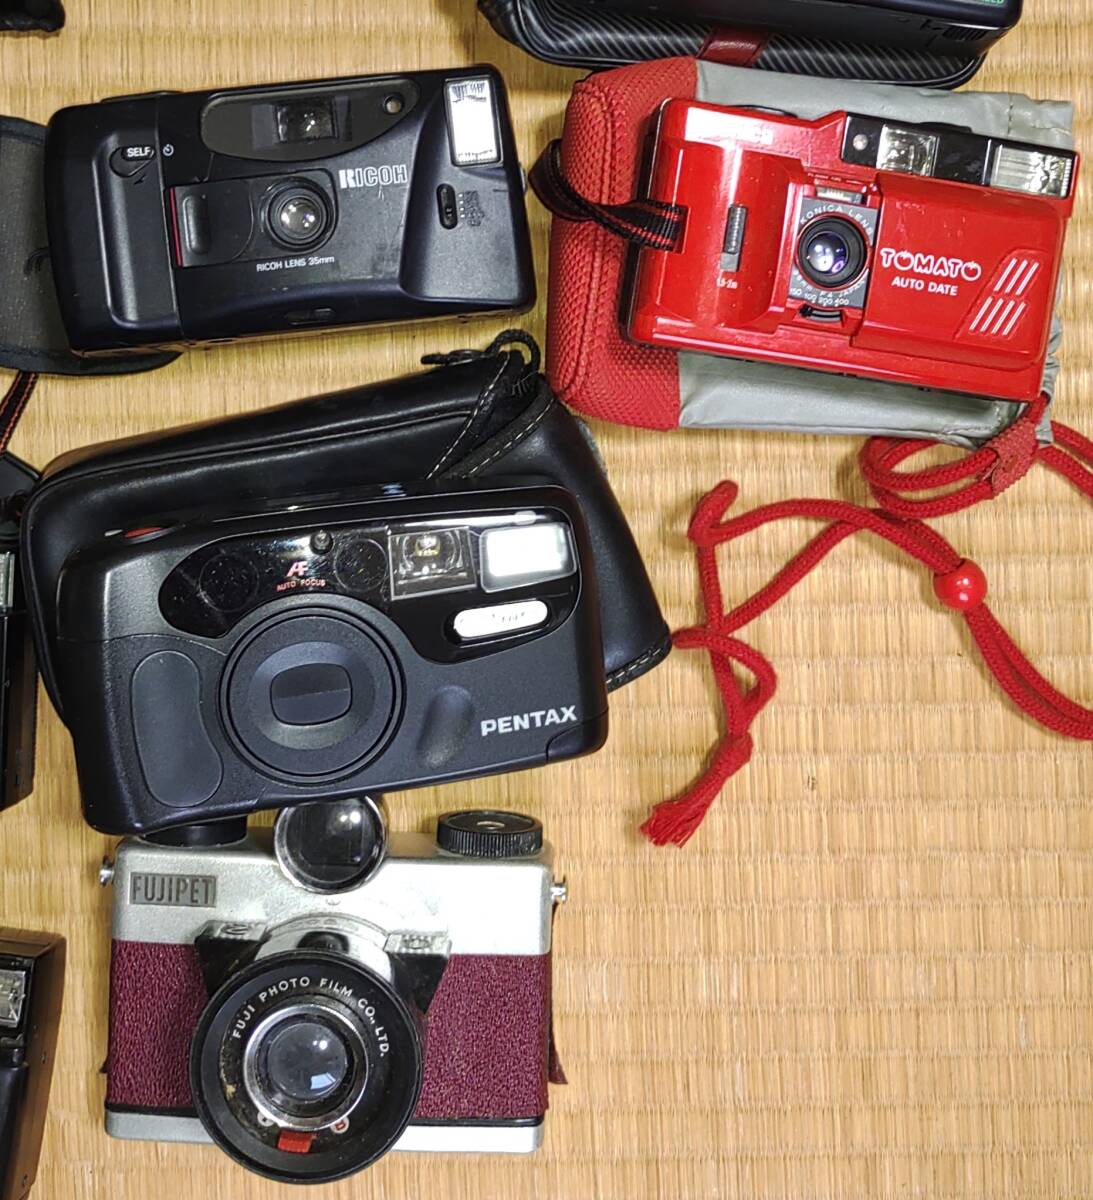  compact пленочный фотоаппарат совместно 19 шт. чёрный корпус / Minolta /FUJICA/ Canon / Olympus /RICOH/ Pentax [ утиль ]